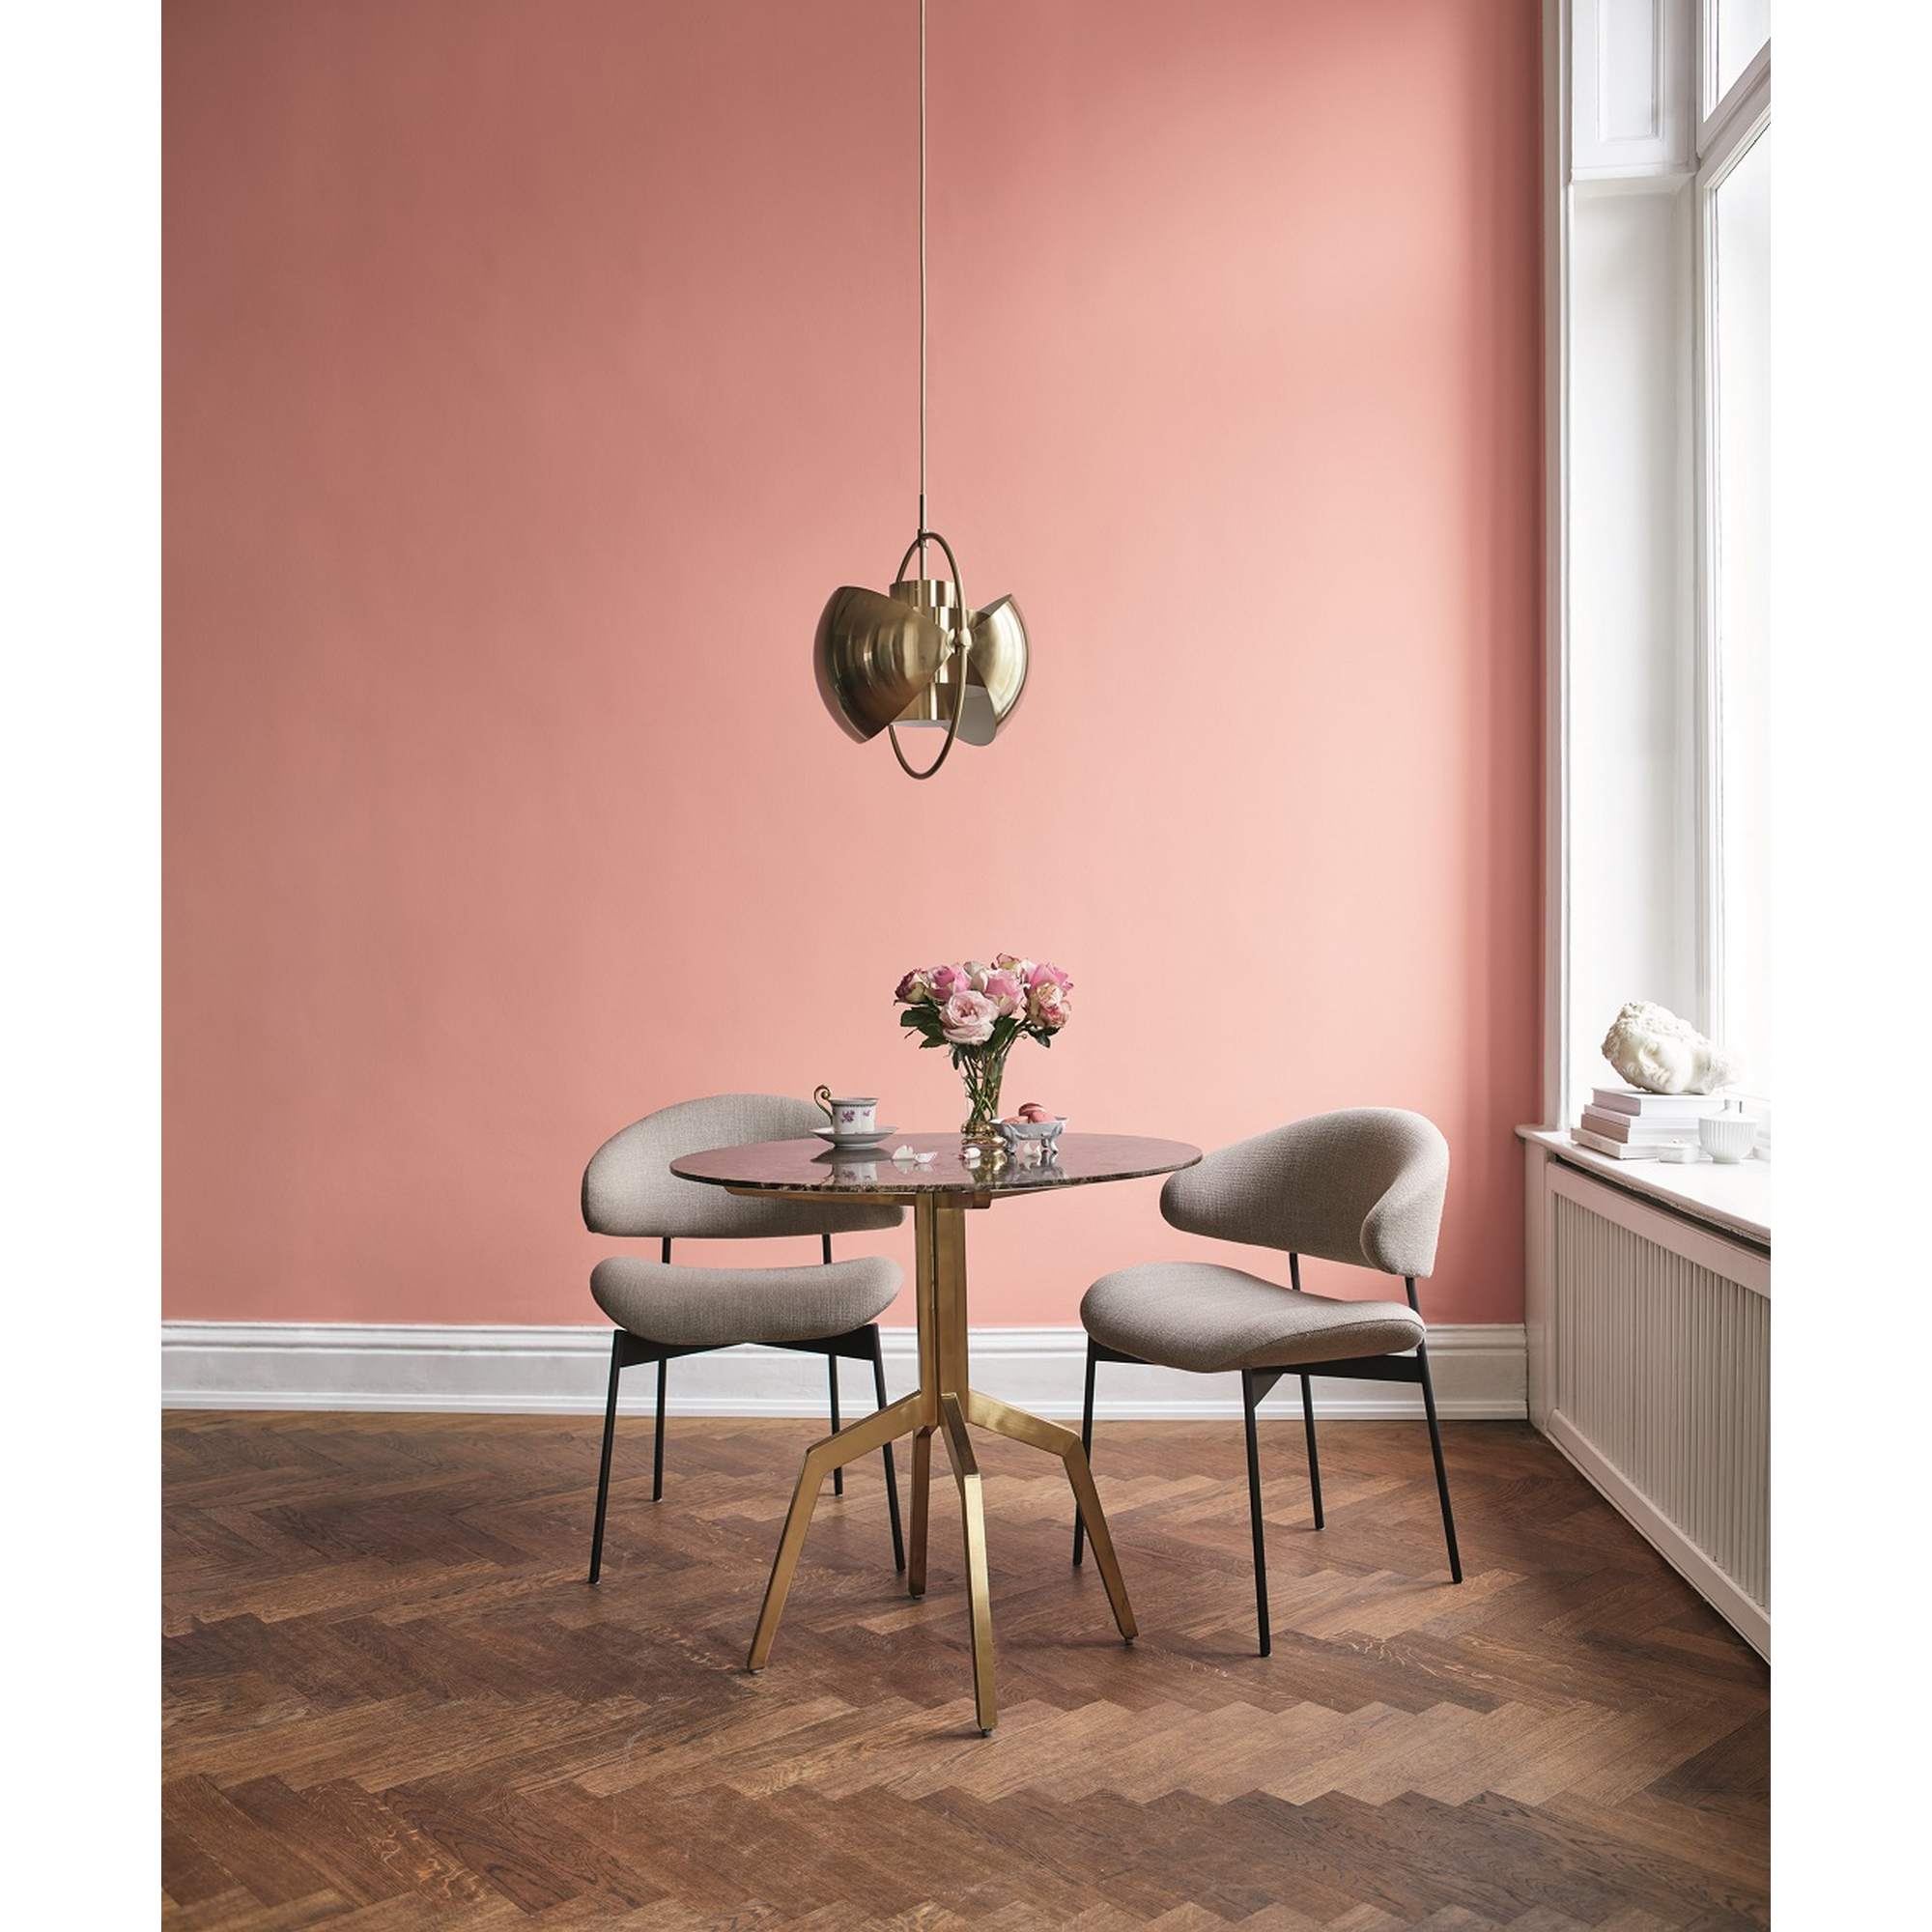 Feine Farben 'Kokette Sinnlichkeit' rosa seidenmatt 2,5 l + product picture